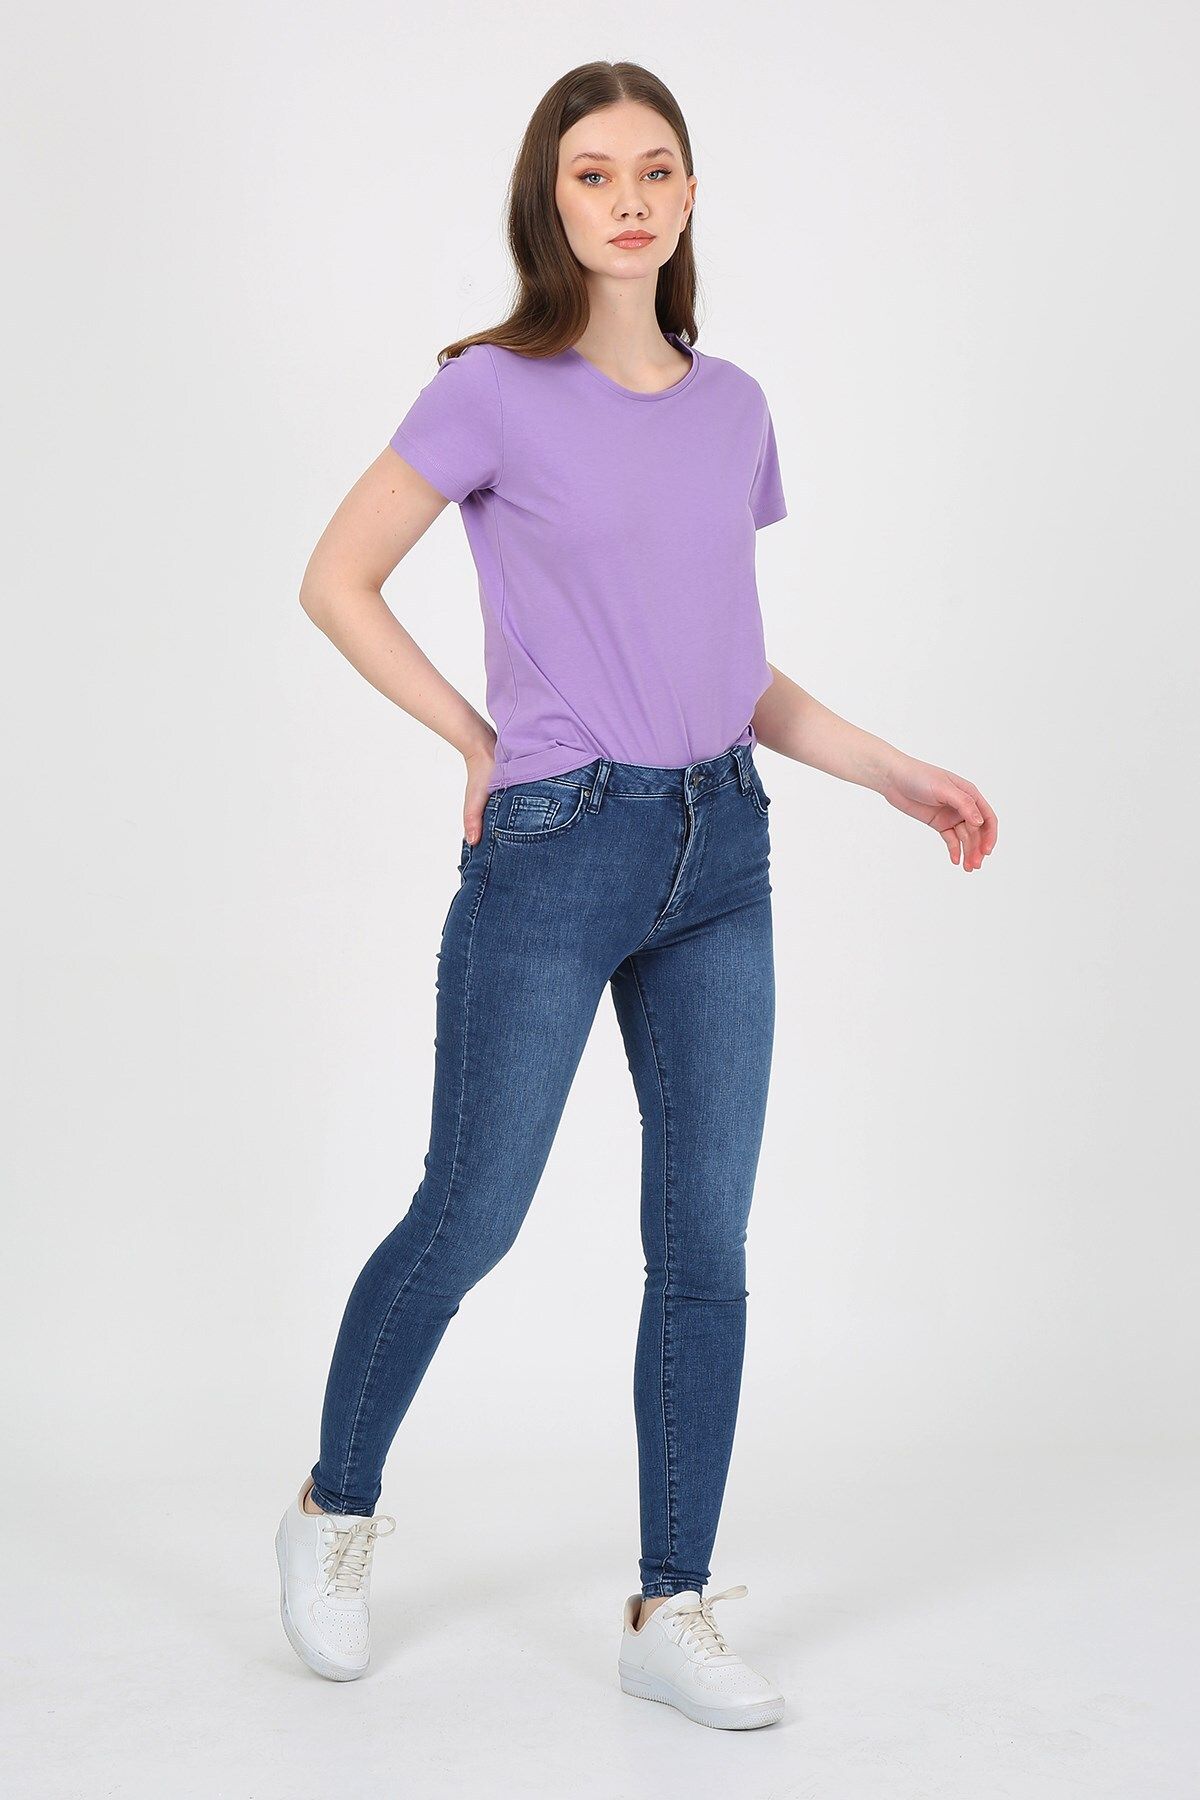 Twister Jeans Kadın Pantolon Eva 9028-105 Lıght Blue